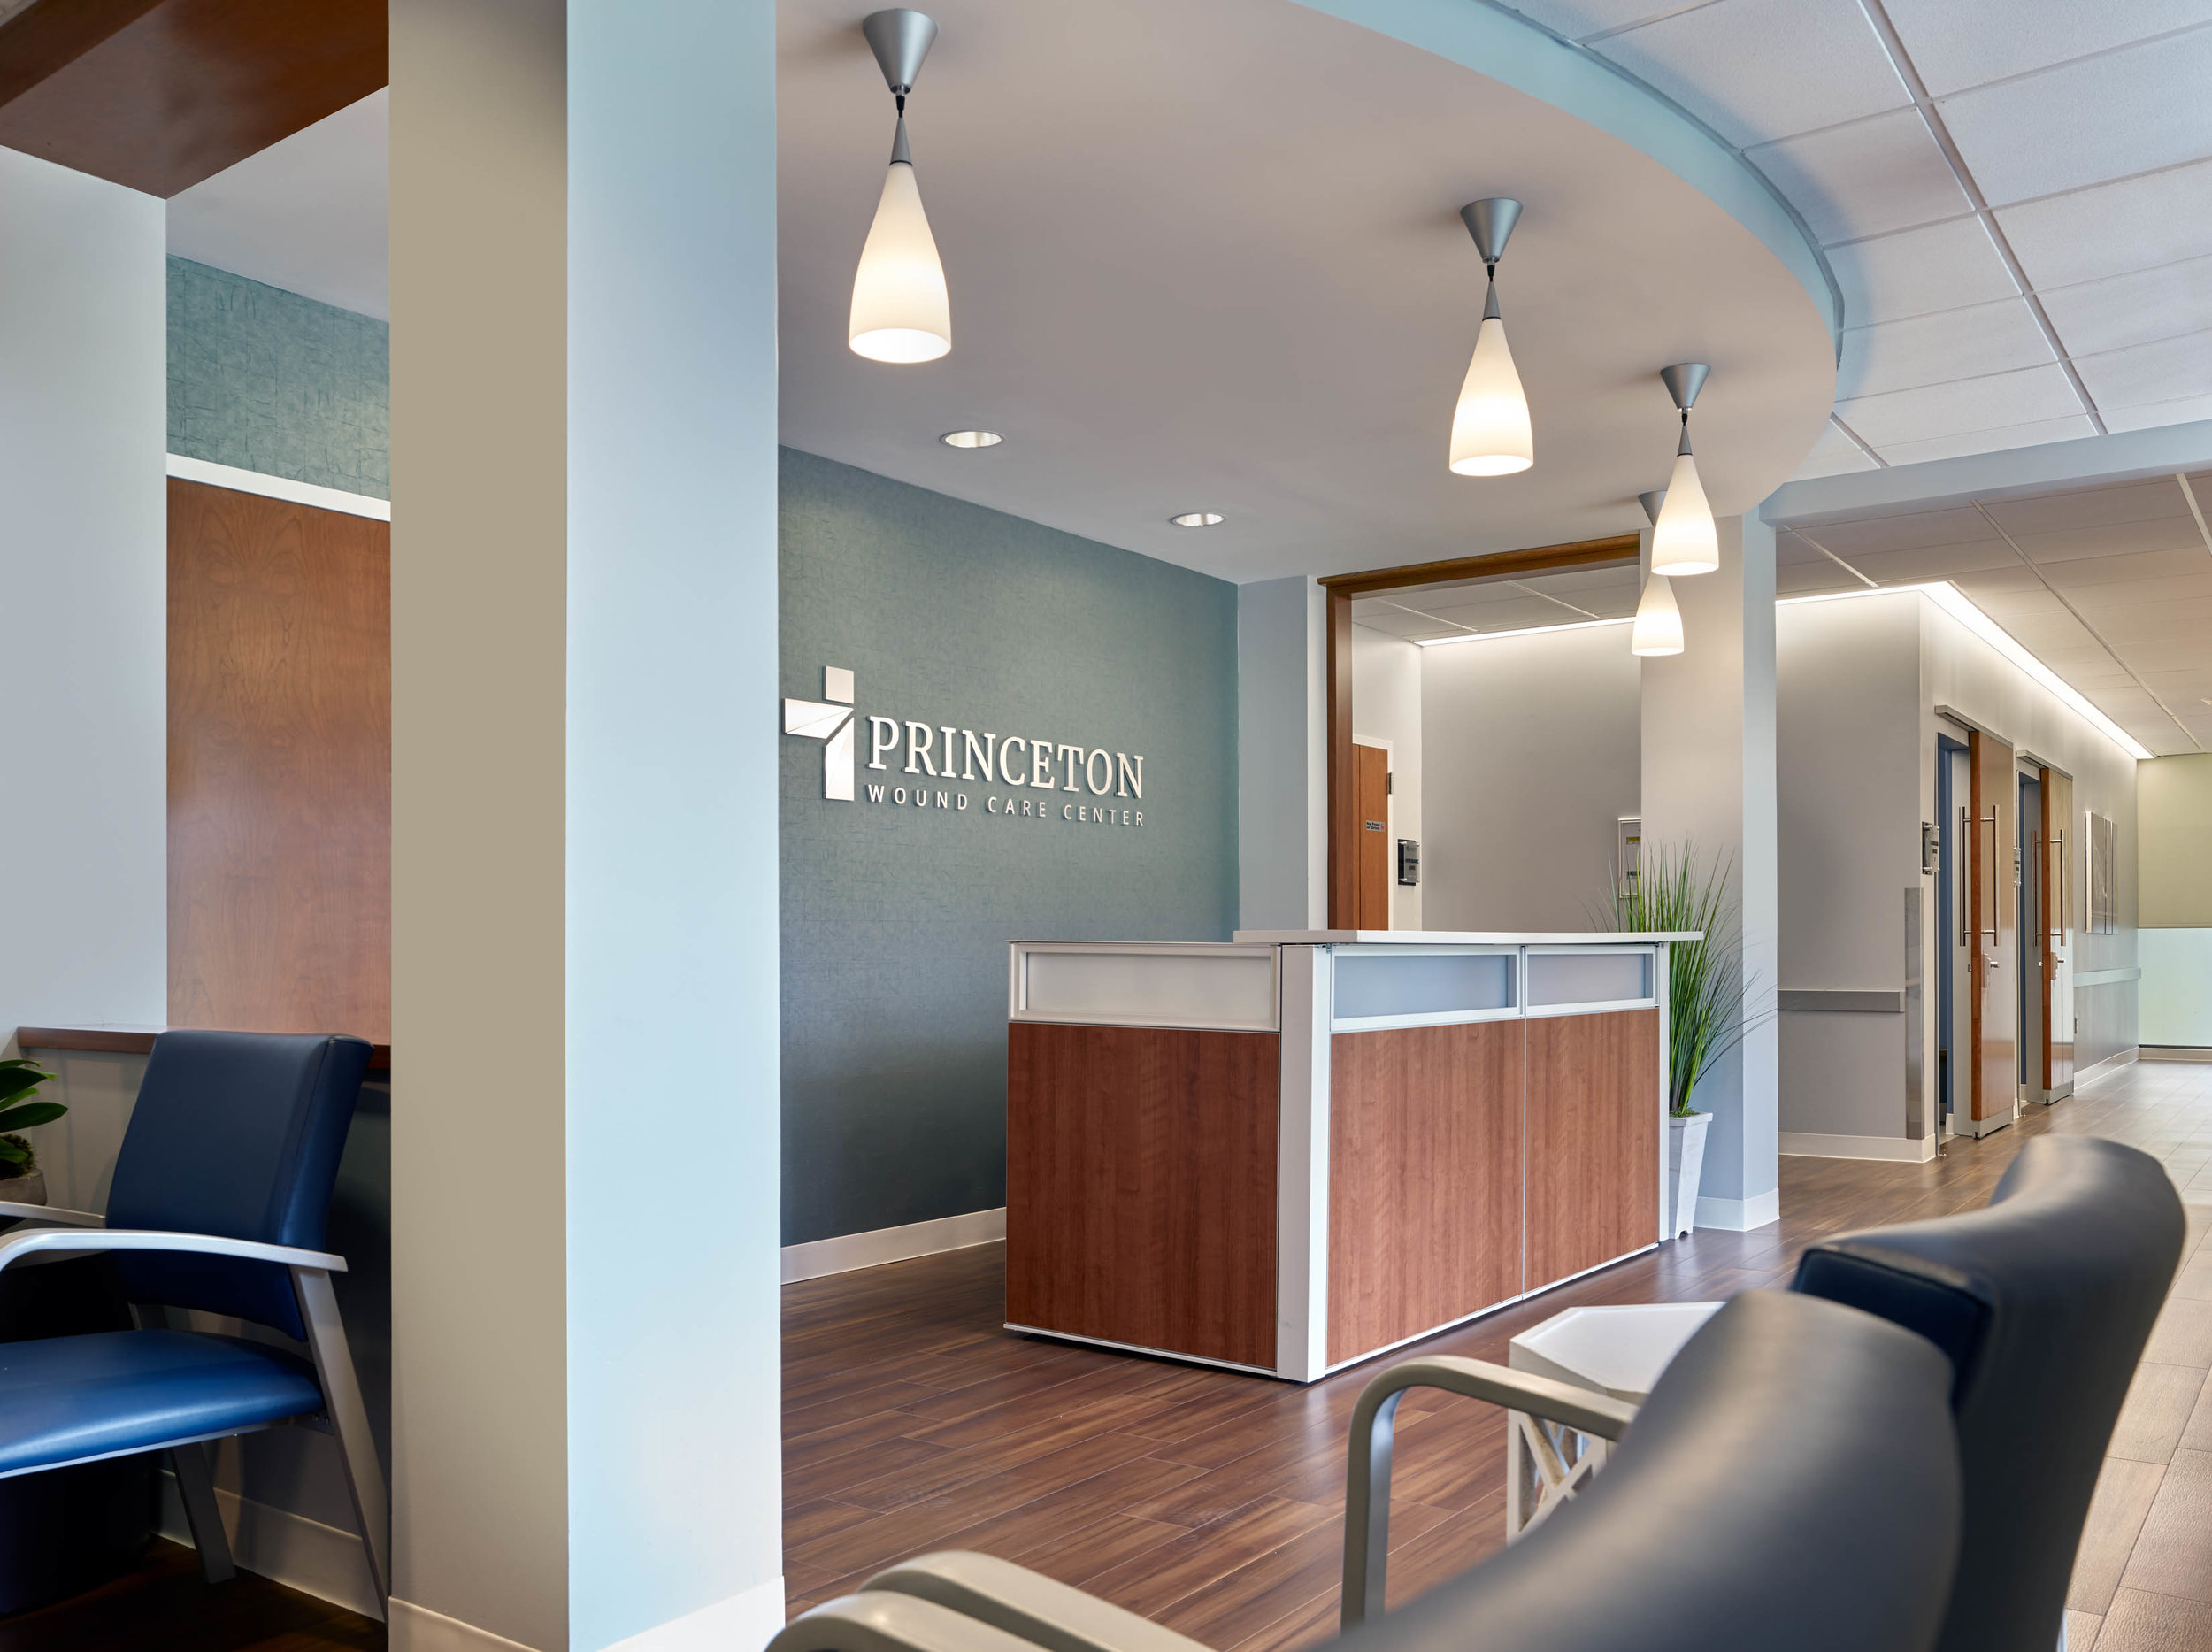 Princeton Wound Care Center